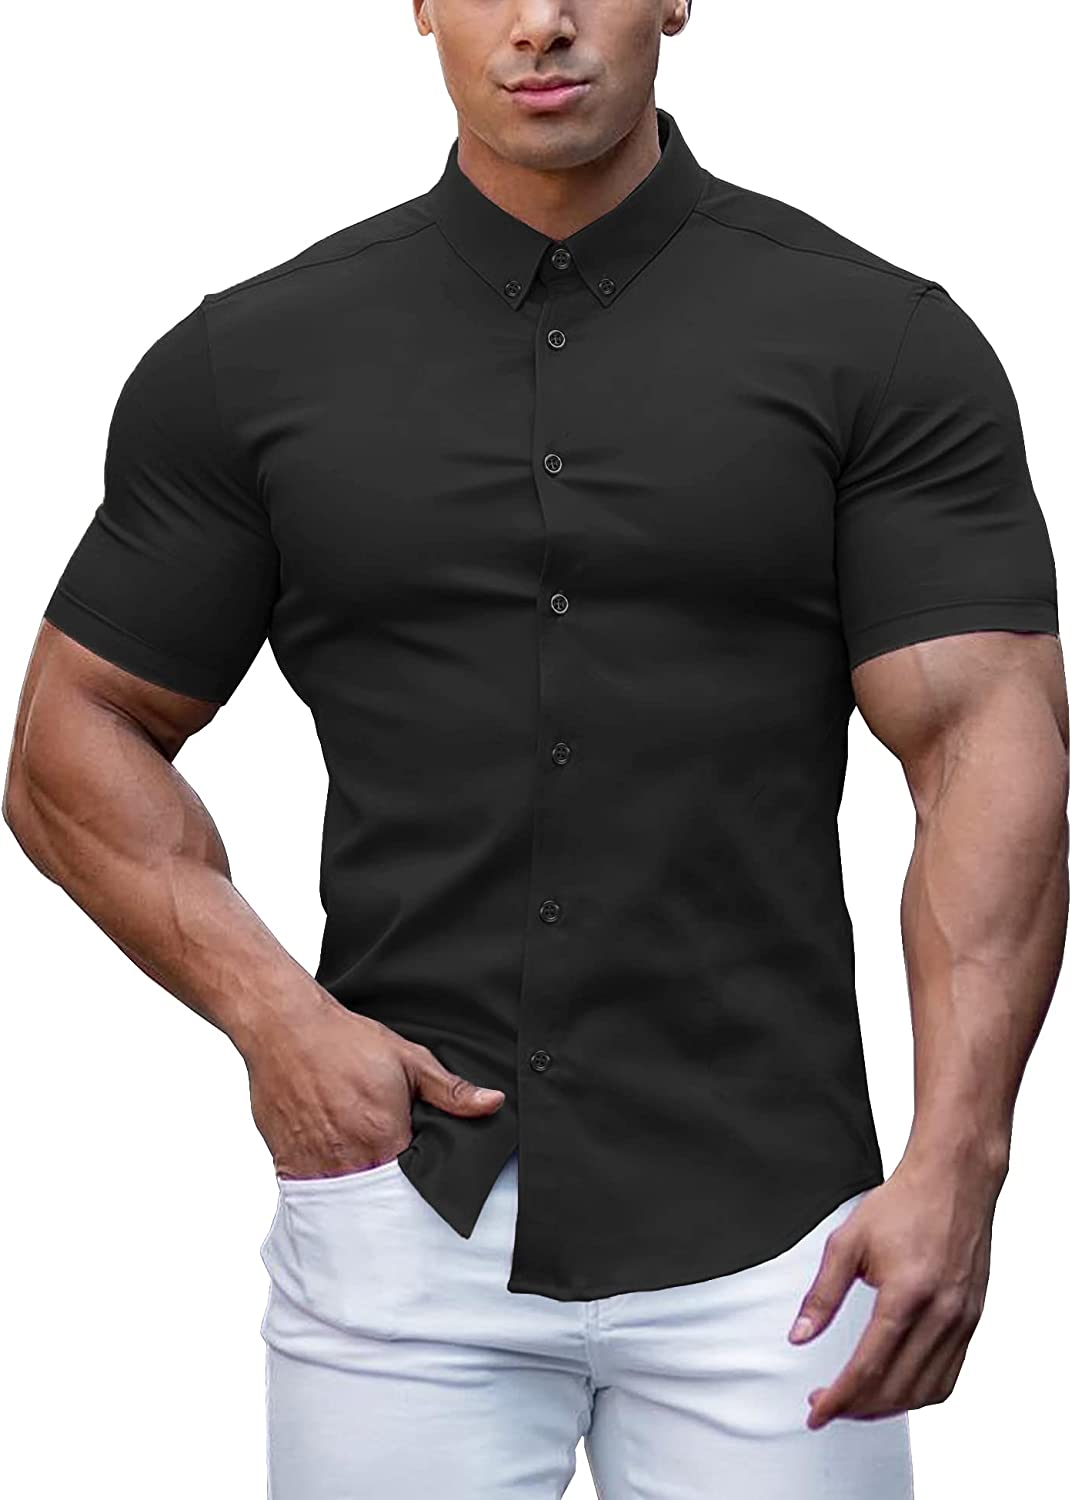  URRU Men's Muscle Dress Shirts Slim Fit Stretch Short